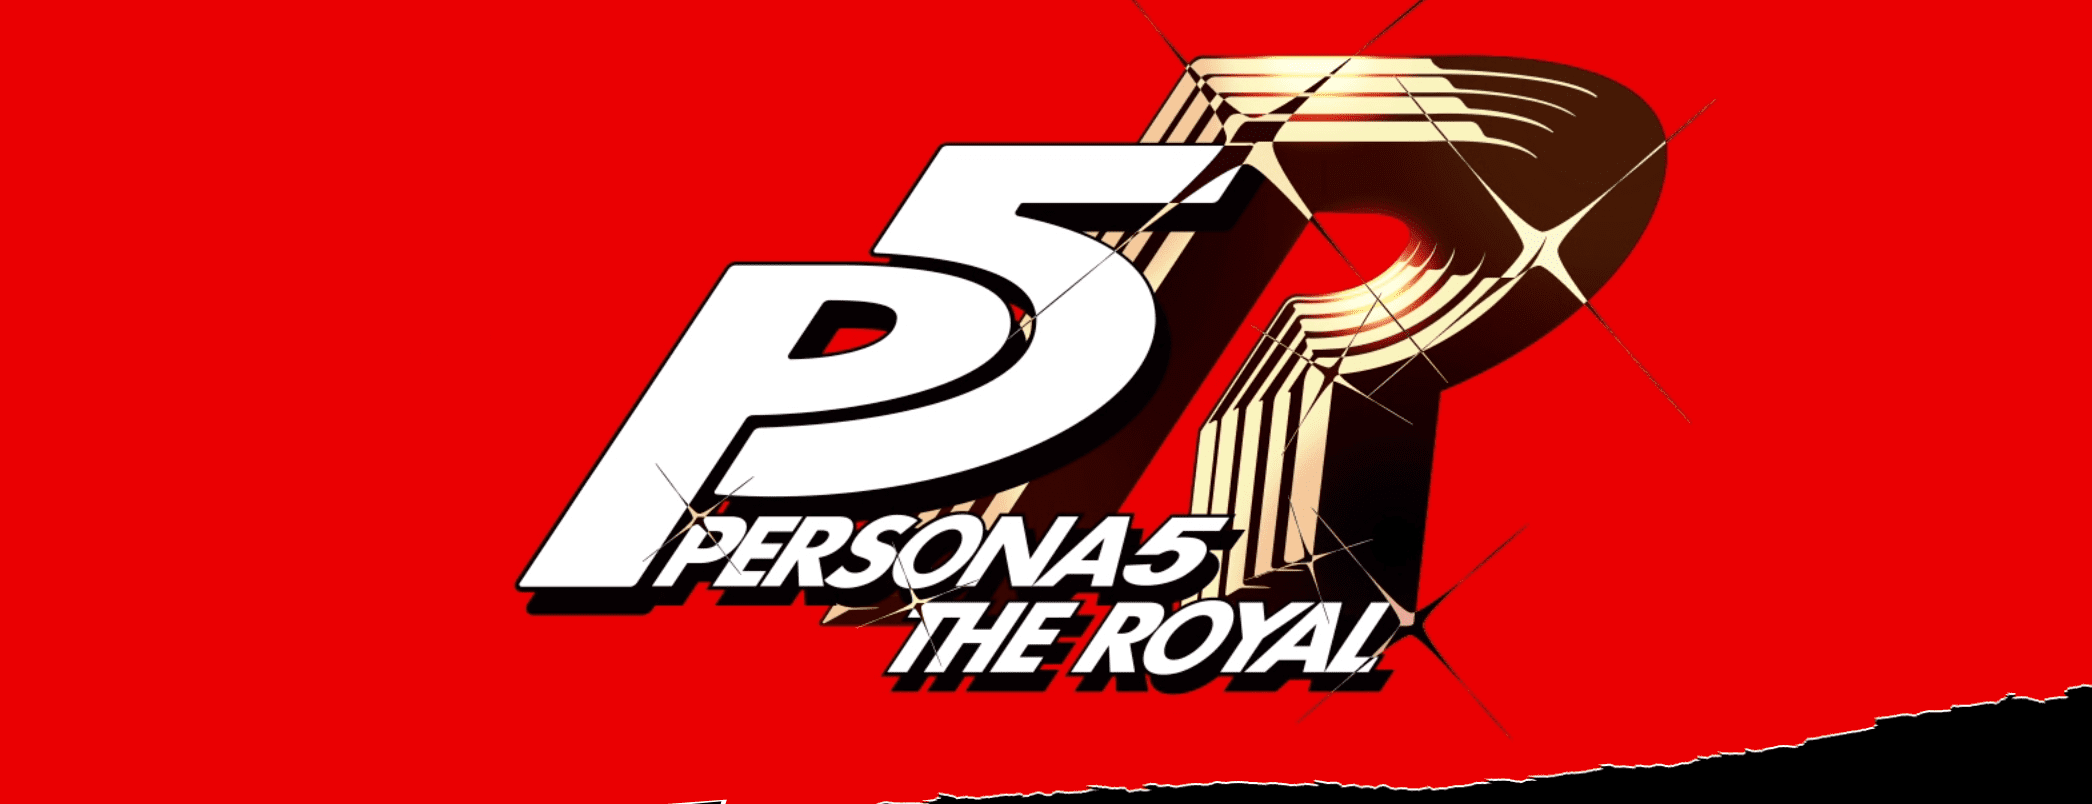 Persona 5 The Royal